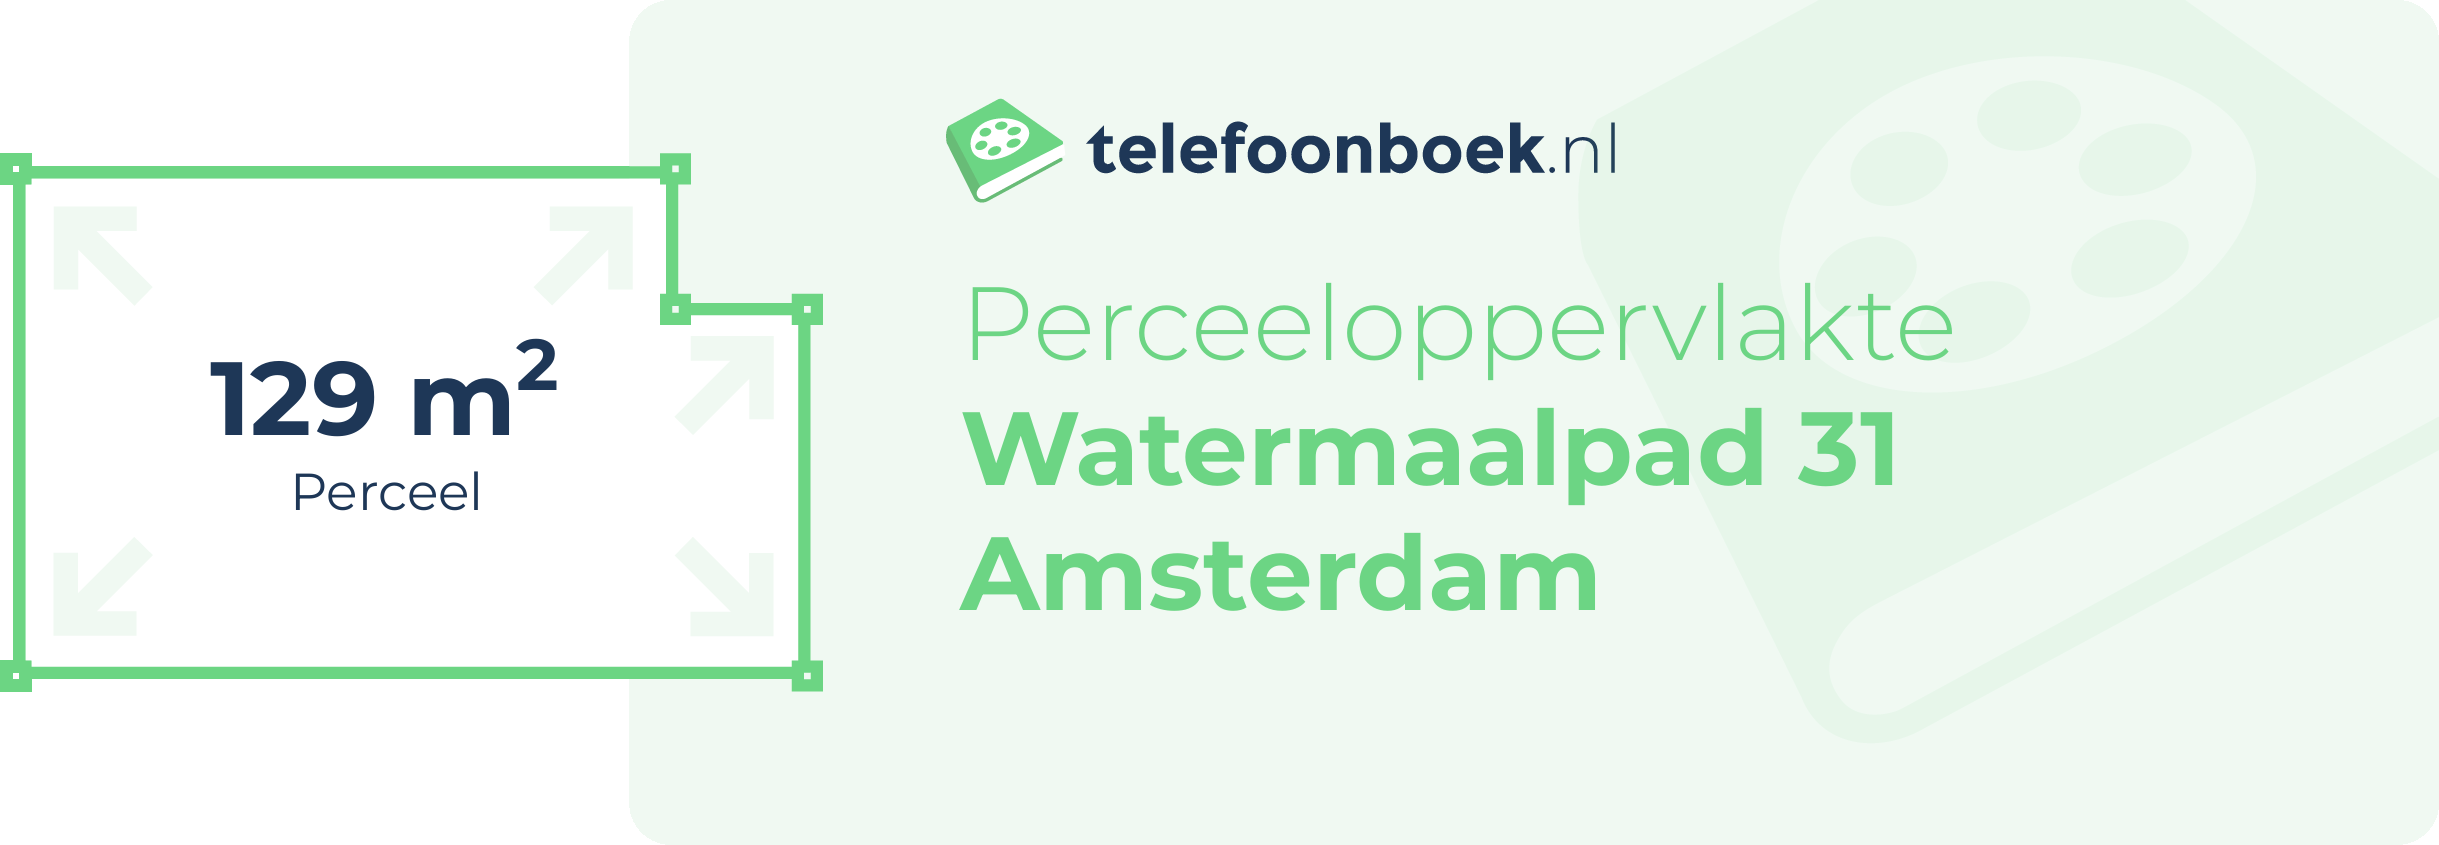 Perceeloppervlakte Watermaalpad 31 Amsterdam